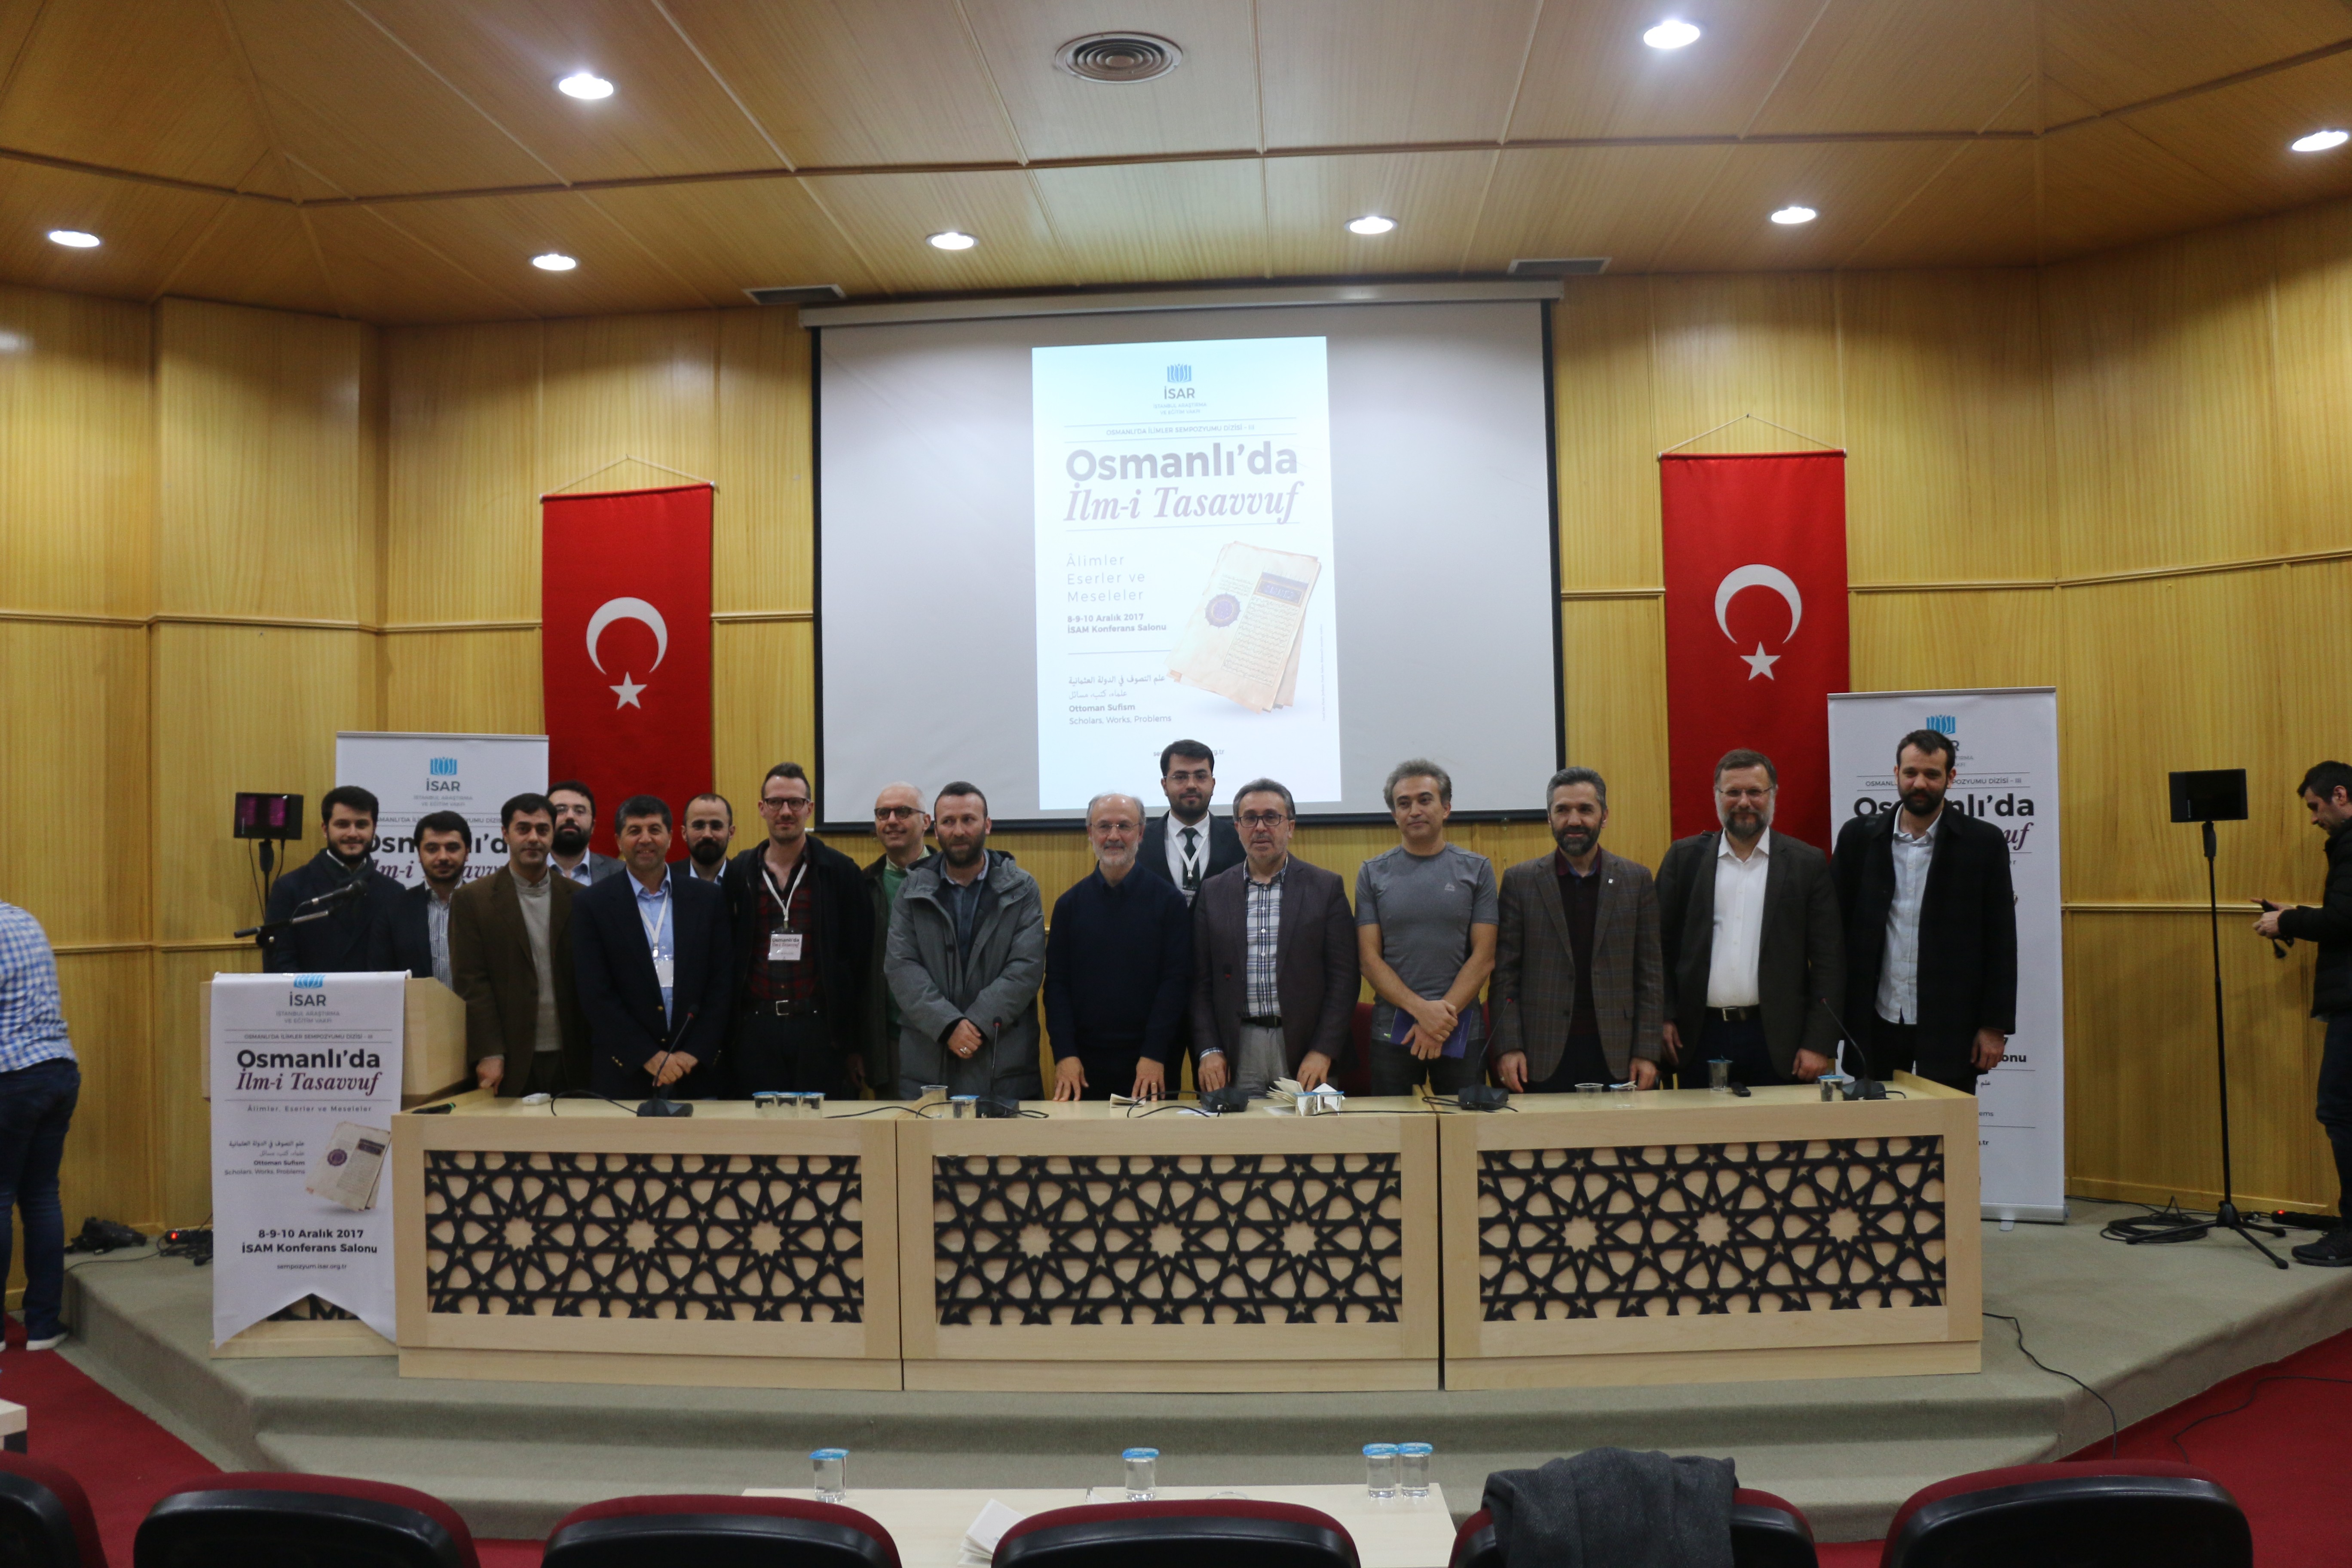 Ottoman Sufism Symposium is held